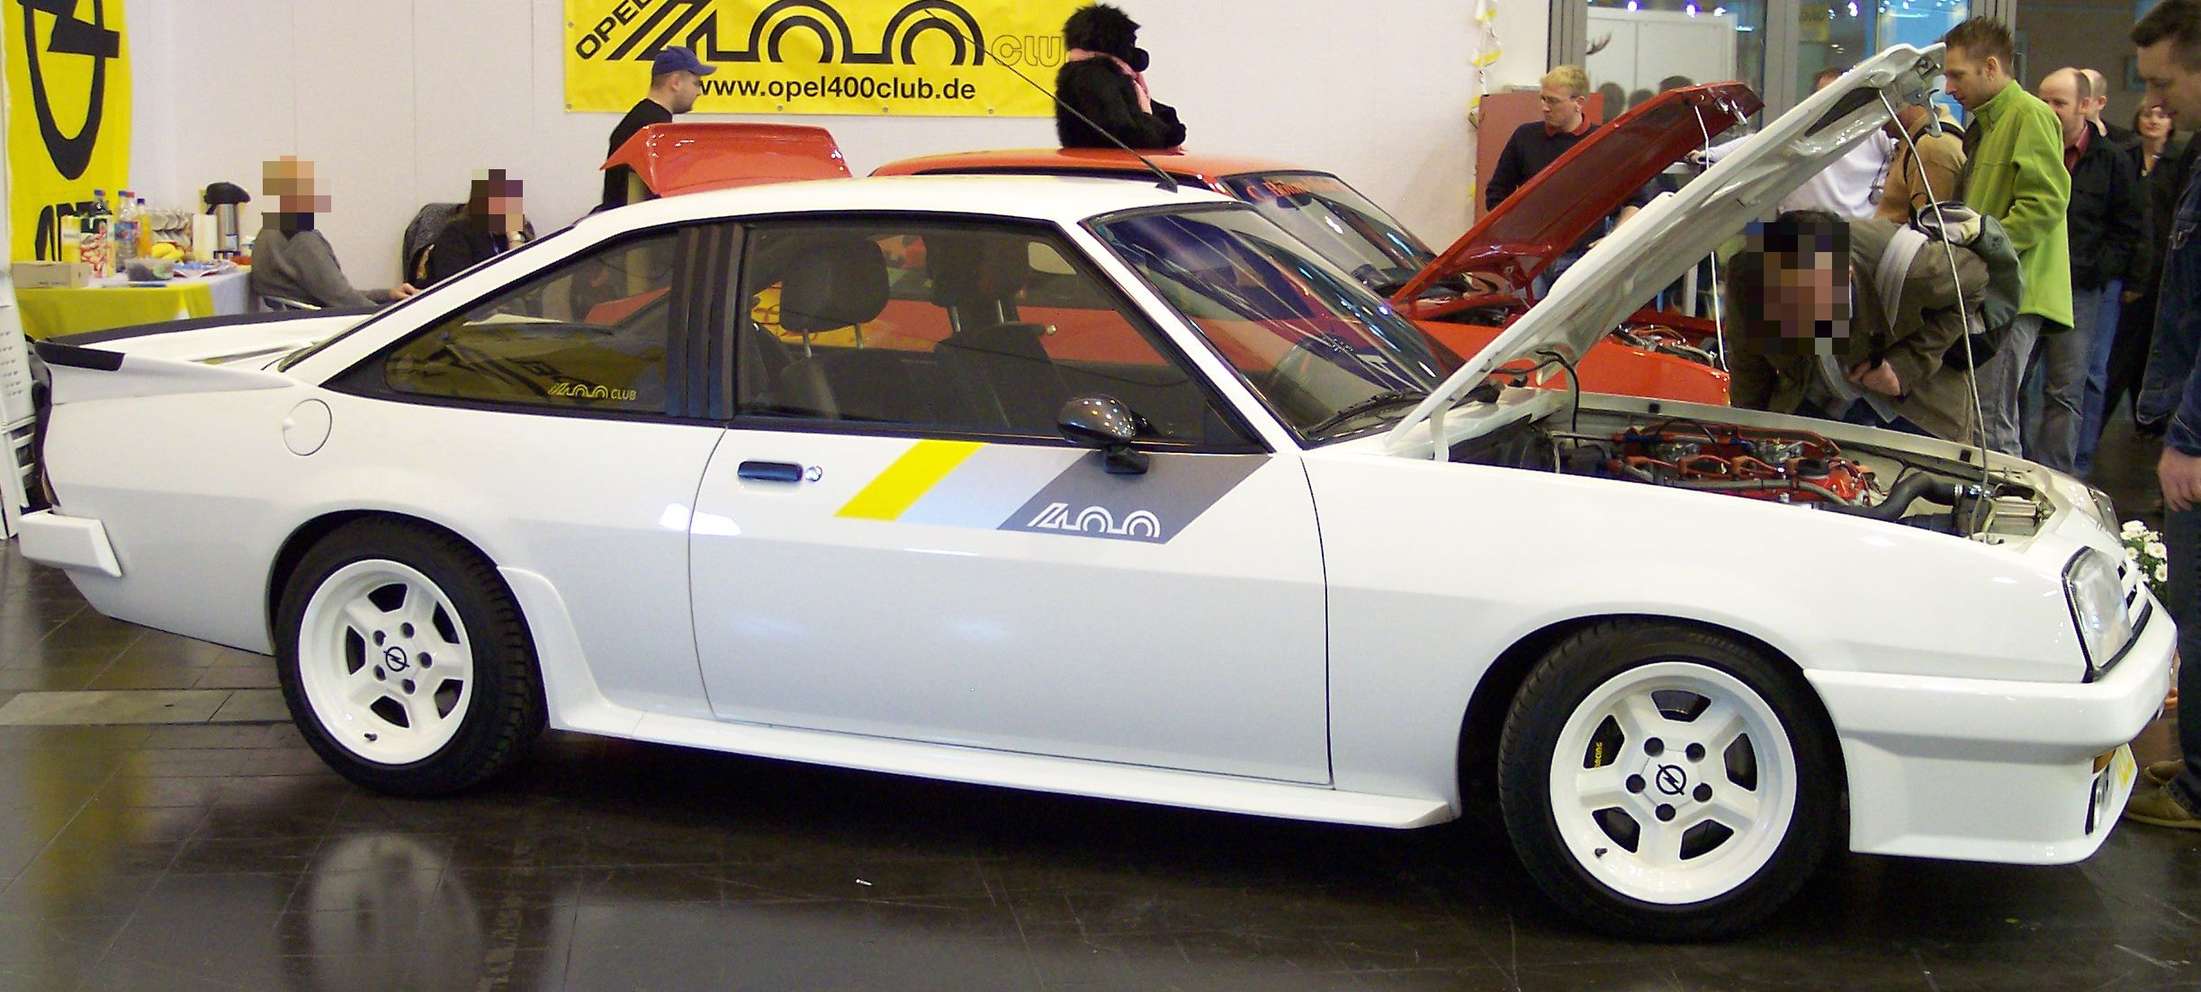 Opel Manta 400 #9326395